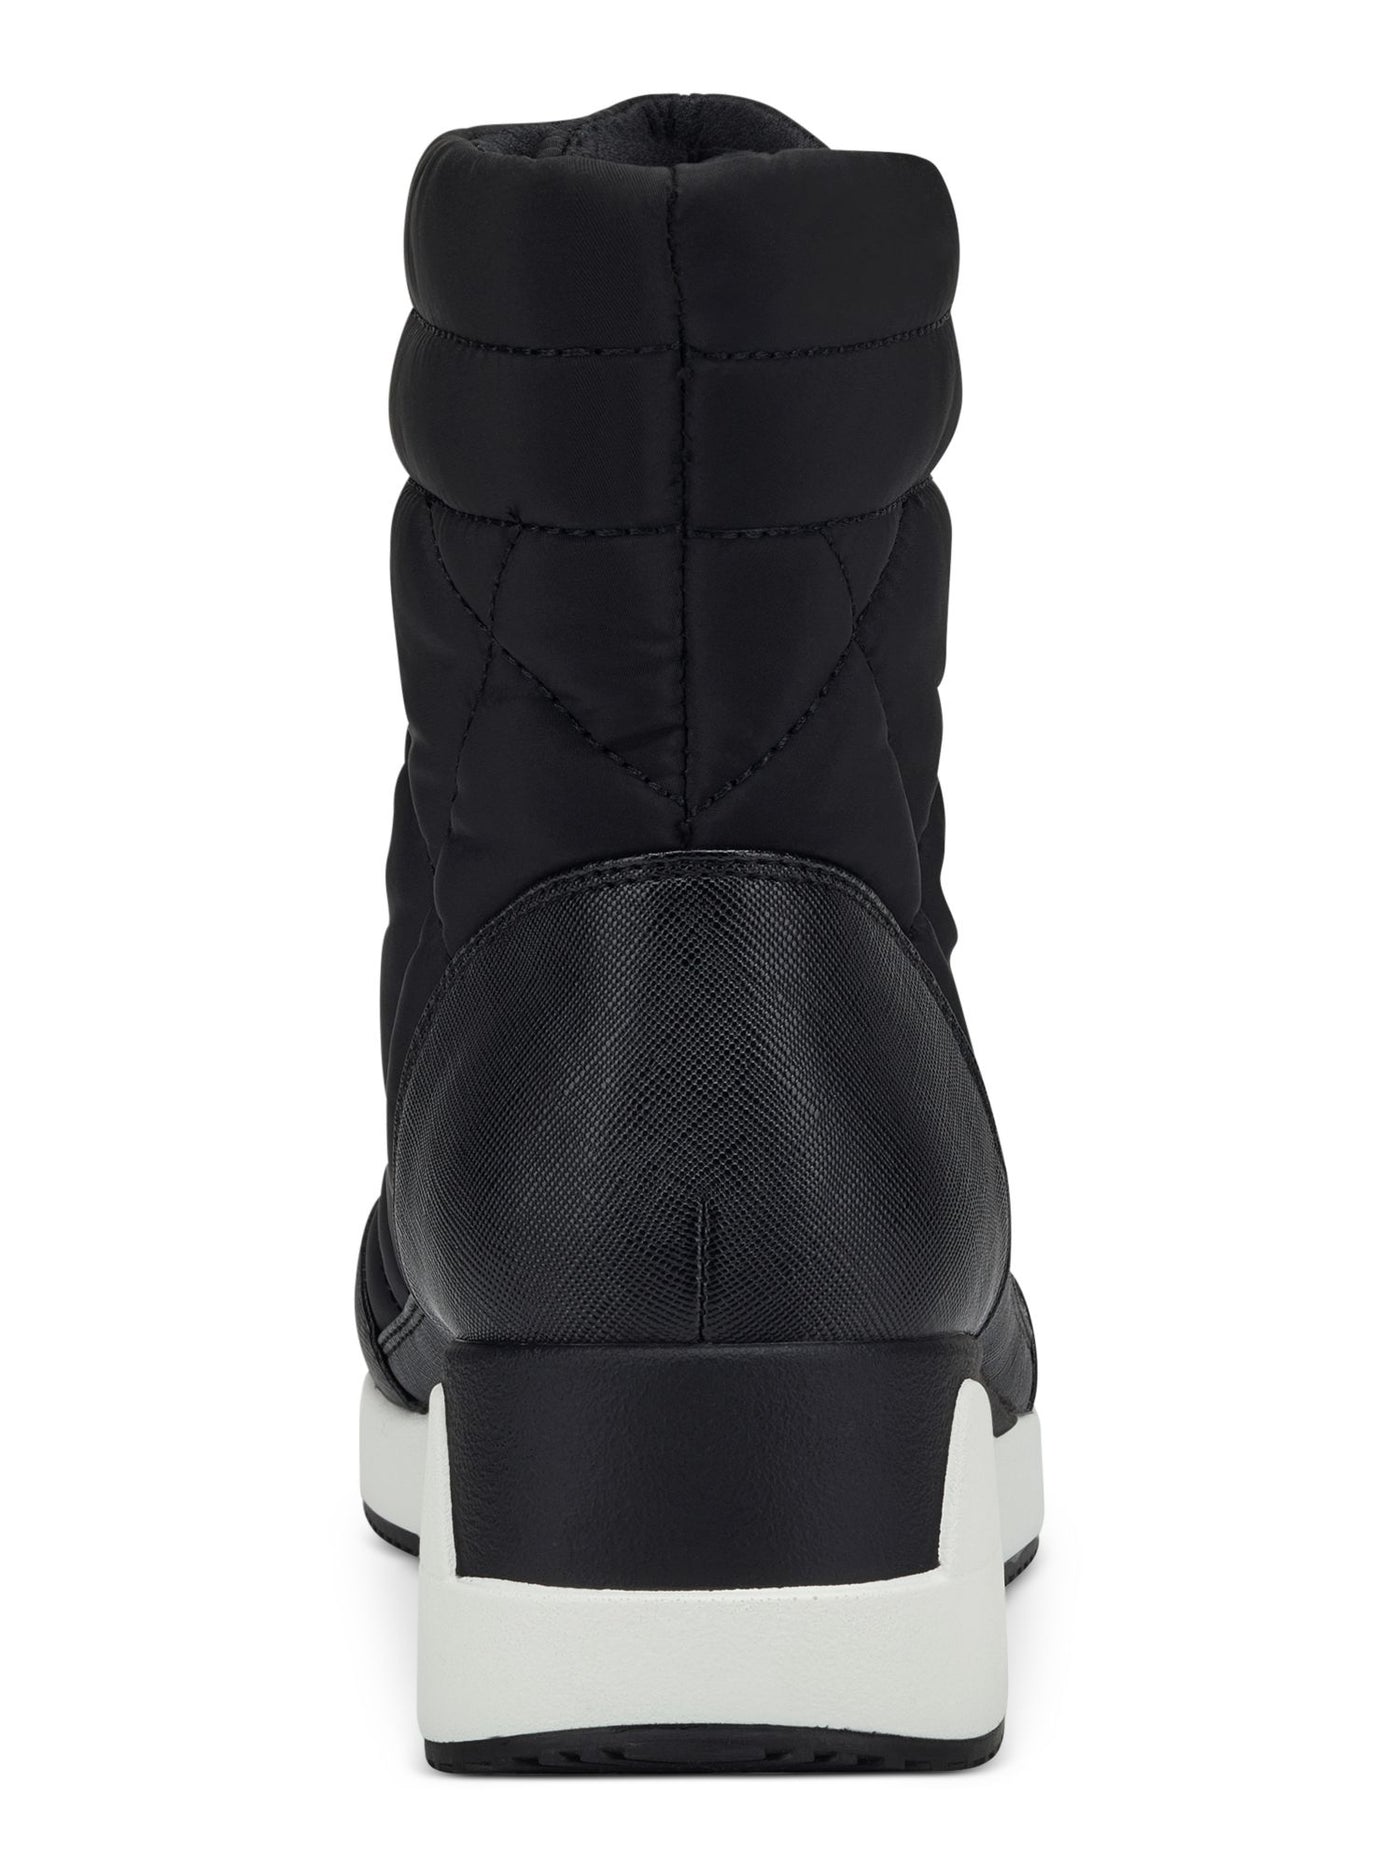 ALFANI Womens Black Mixed Media Cushioned Whitnee Round Toe Wedge Zip-Up Sneakers Shoes 6.5 M